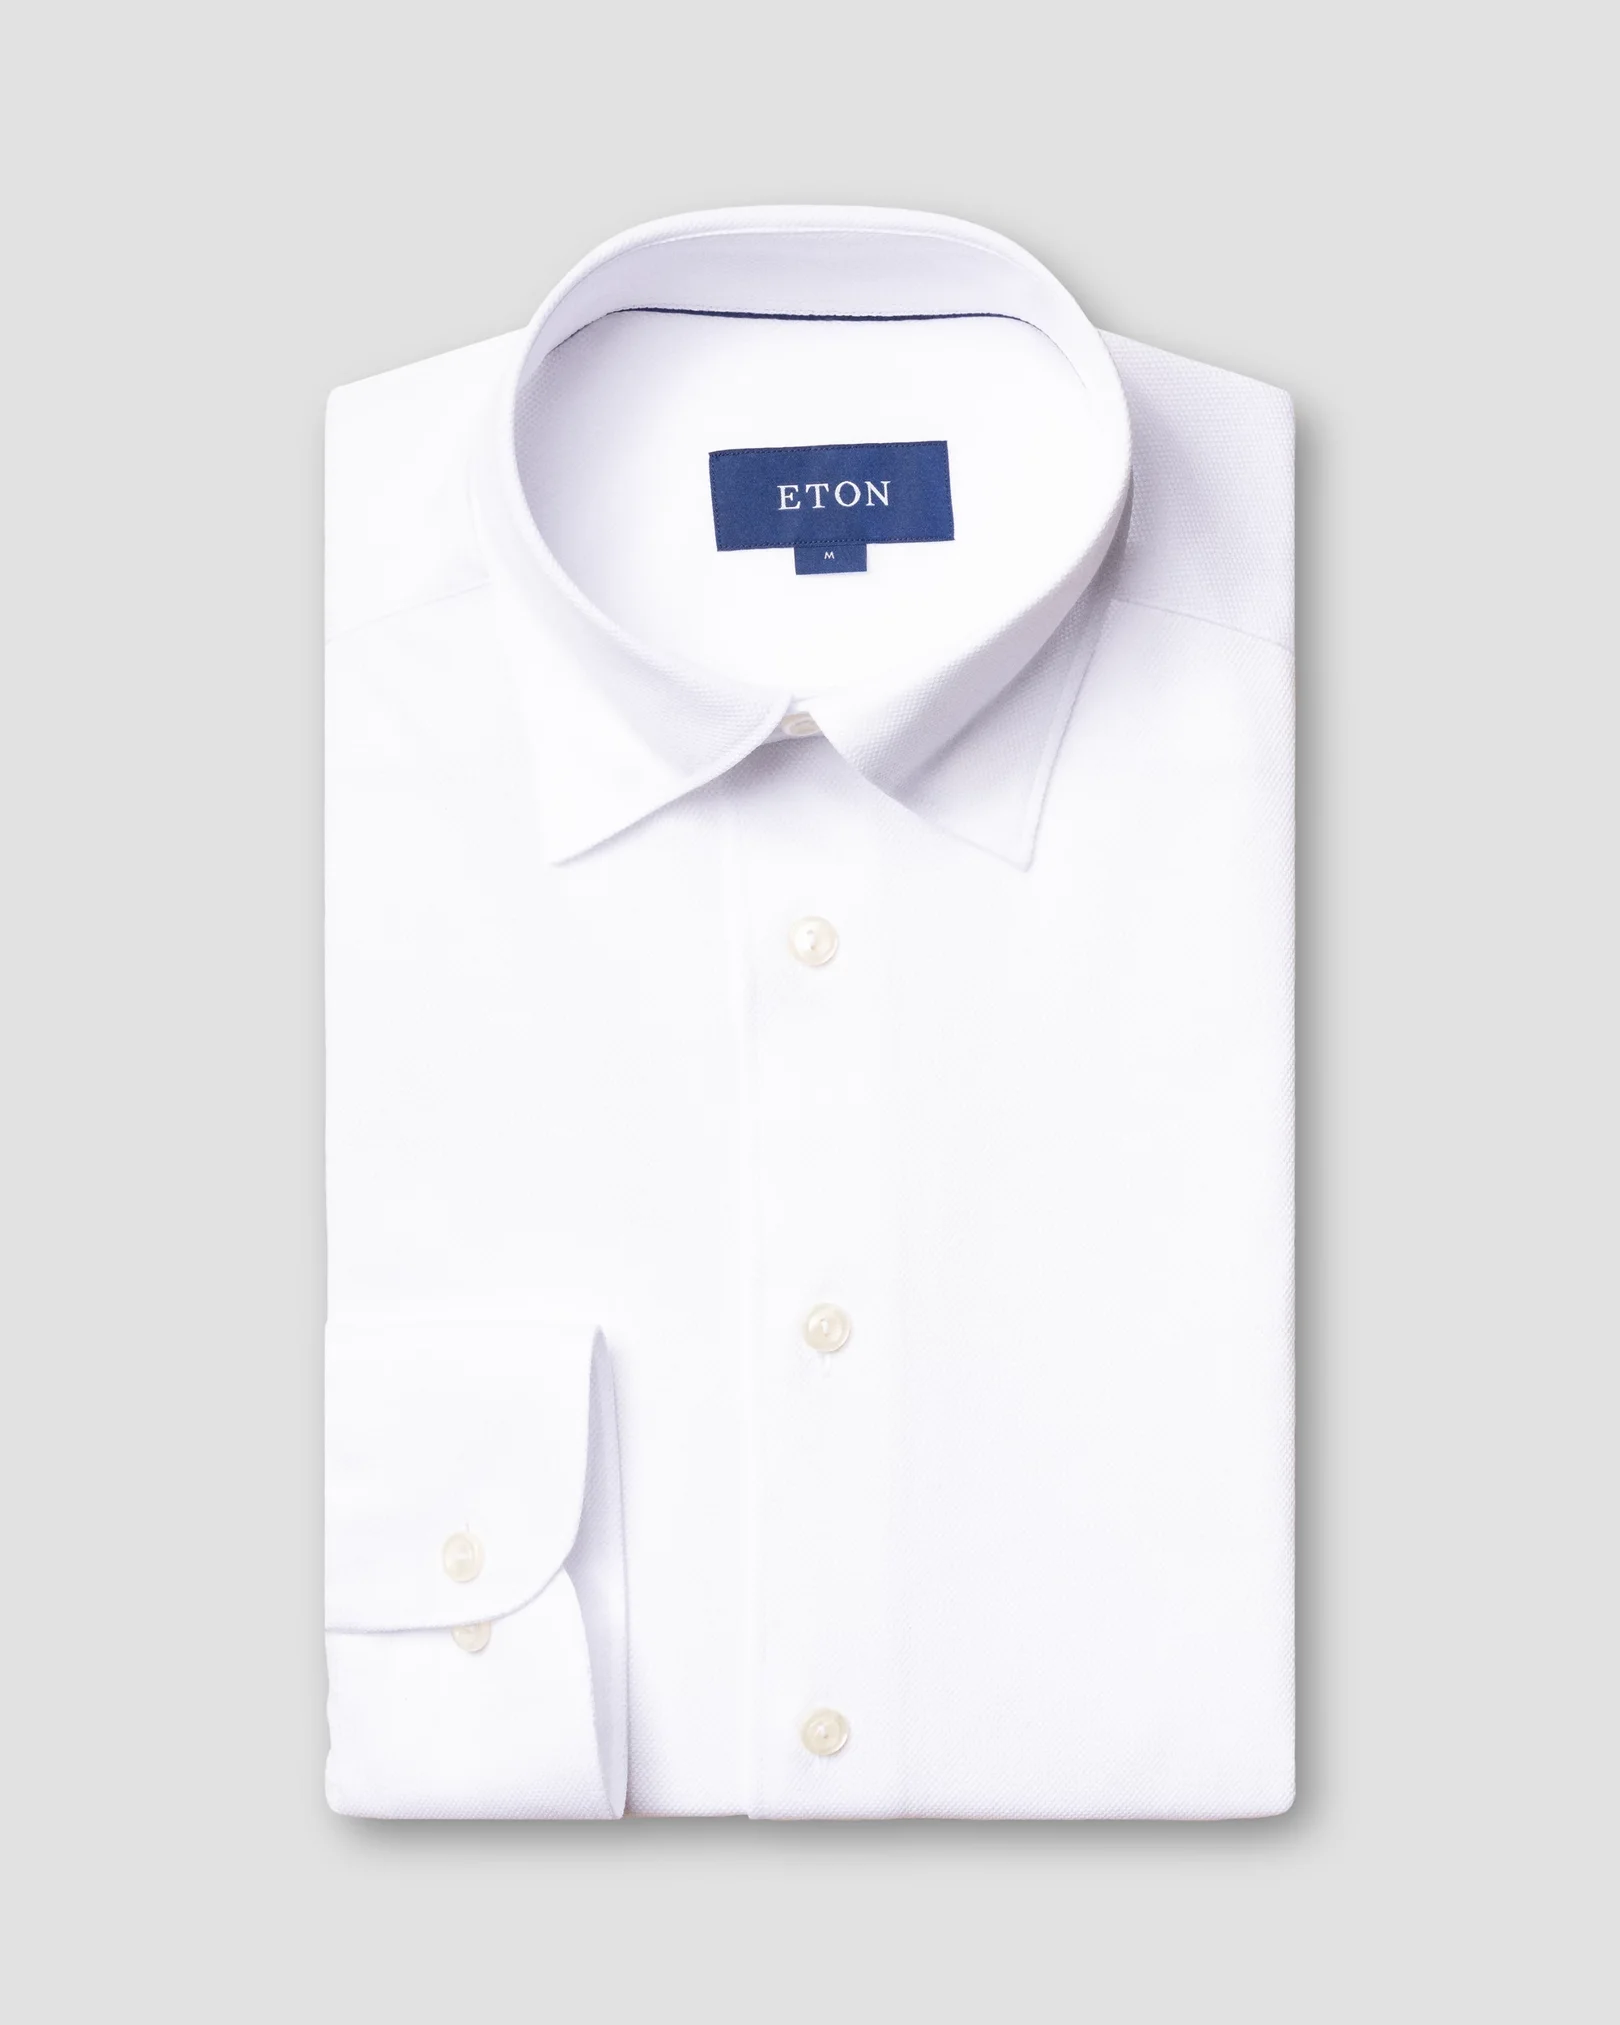 Eton - white pique shirt long sleeved